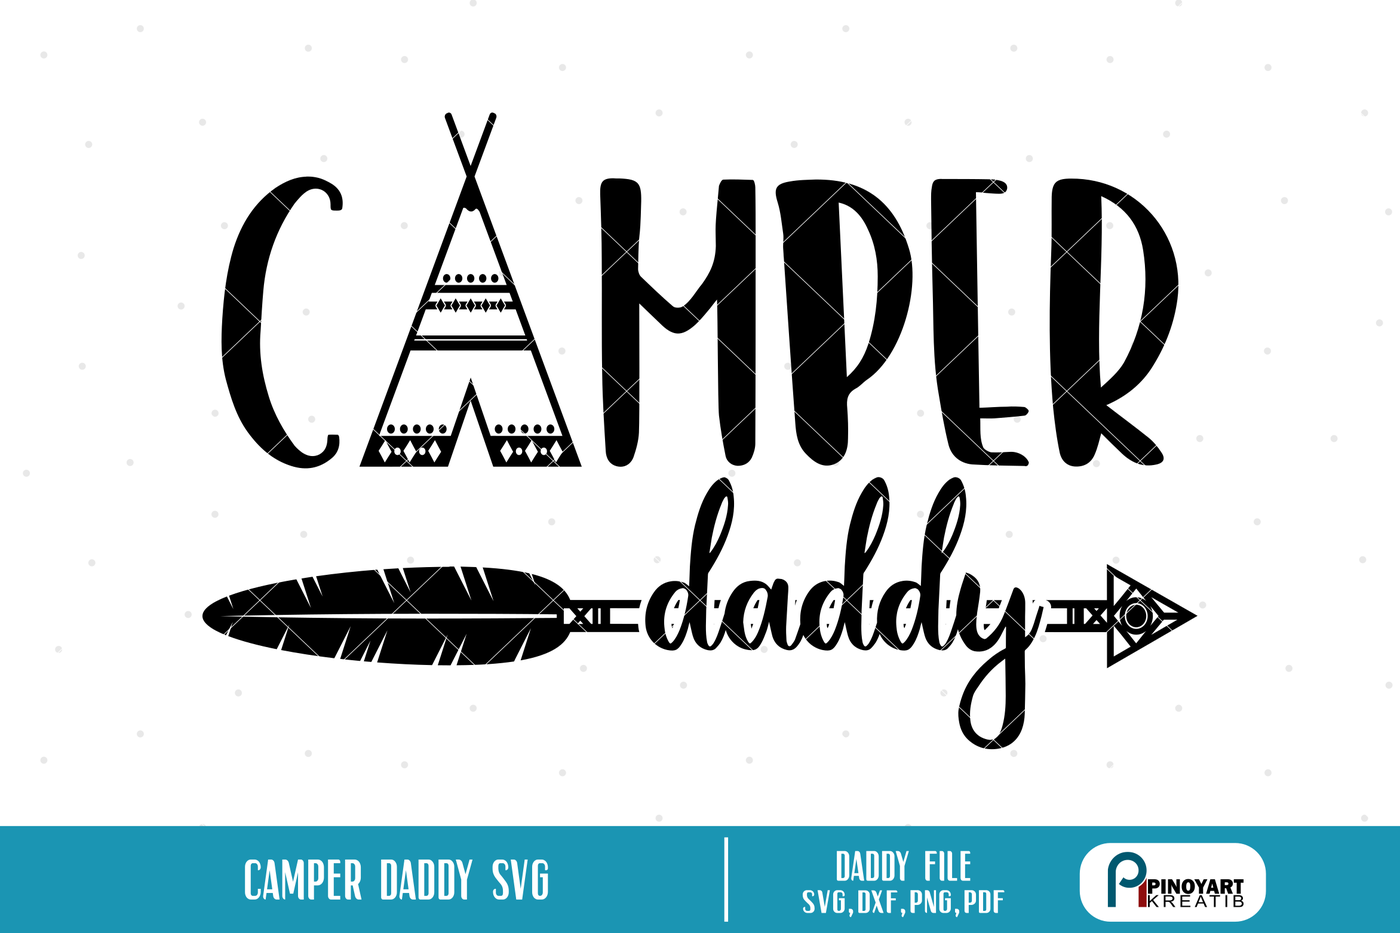 Camper Daddy Svg Daddy Svg Camper Svg Camping Svg File Camping Dxf Svg By Pinoyart Thehungryjpeg Com